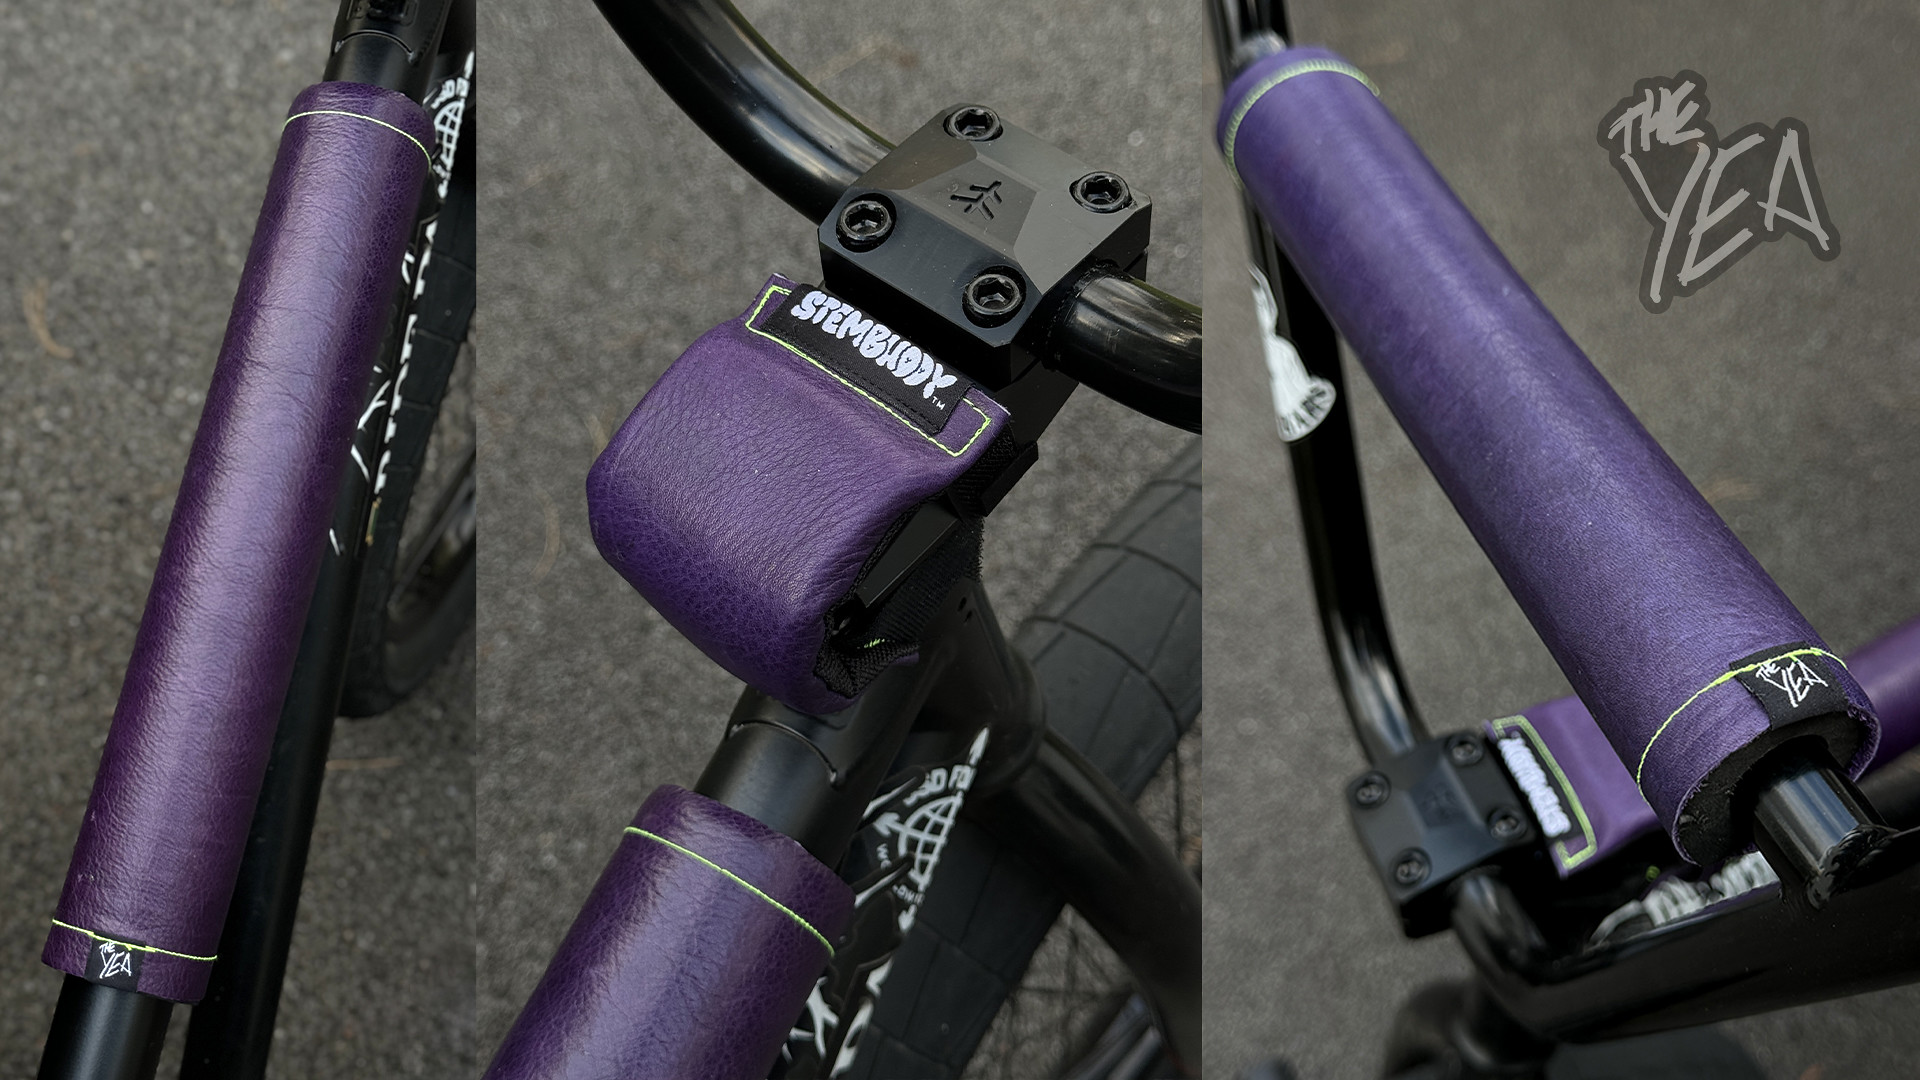 the yea bmx spooky purple leather bike pads